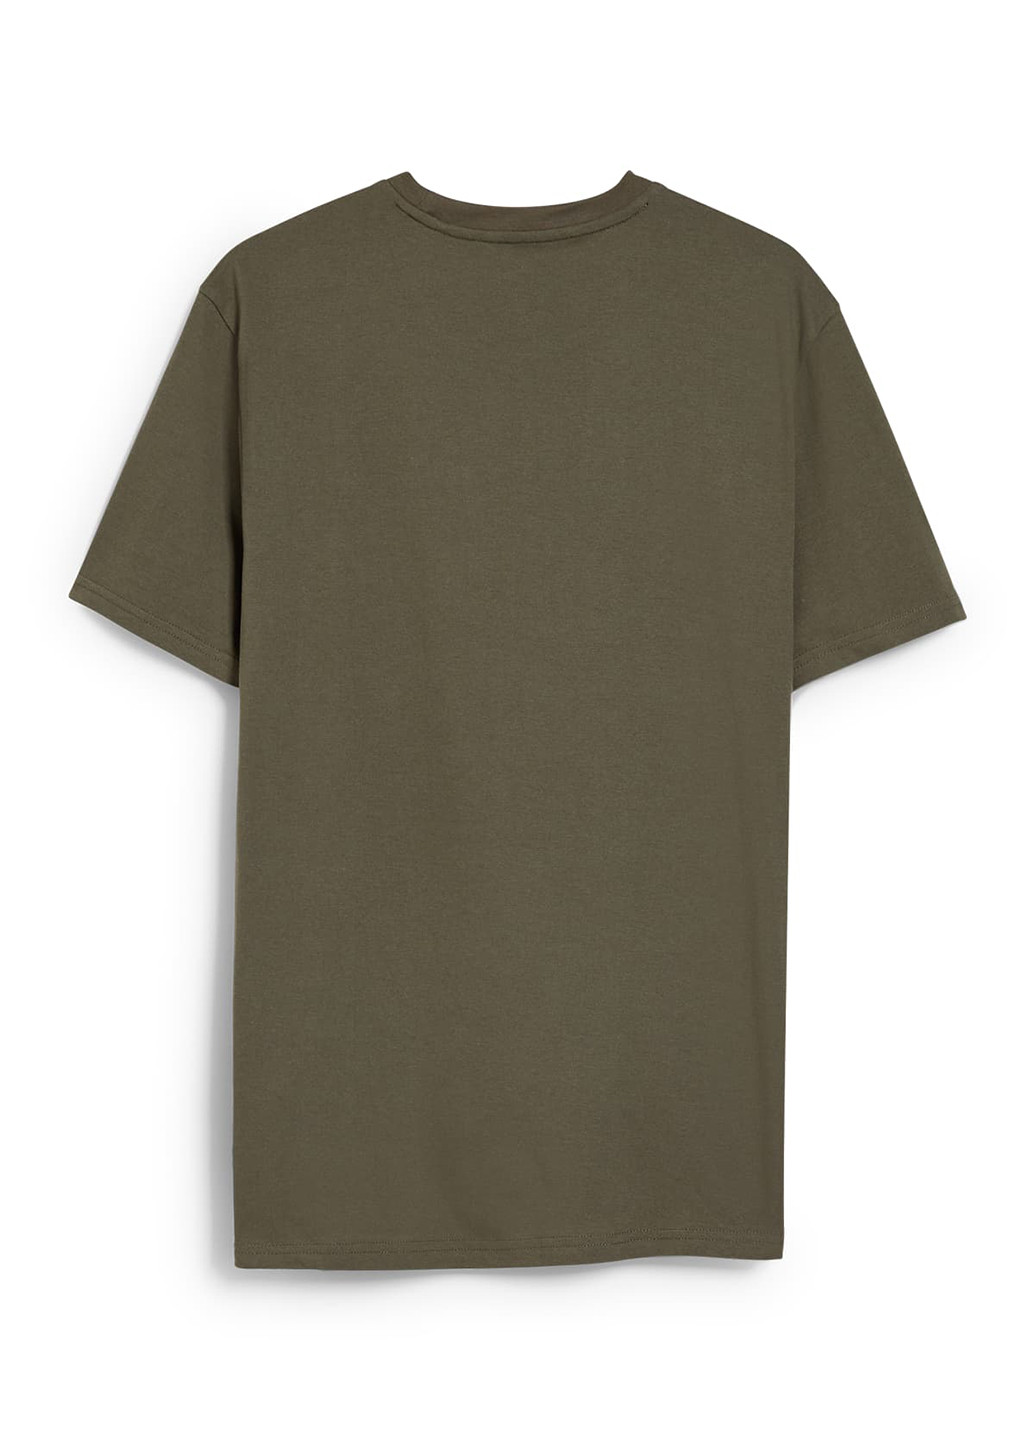 Хаки (оливковая) футболка C&A